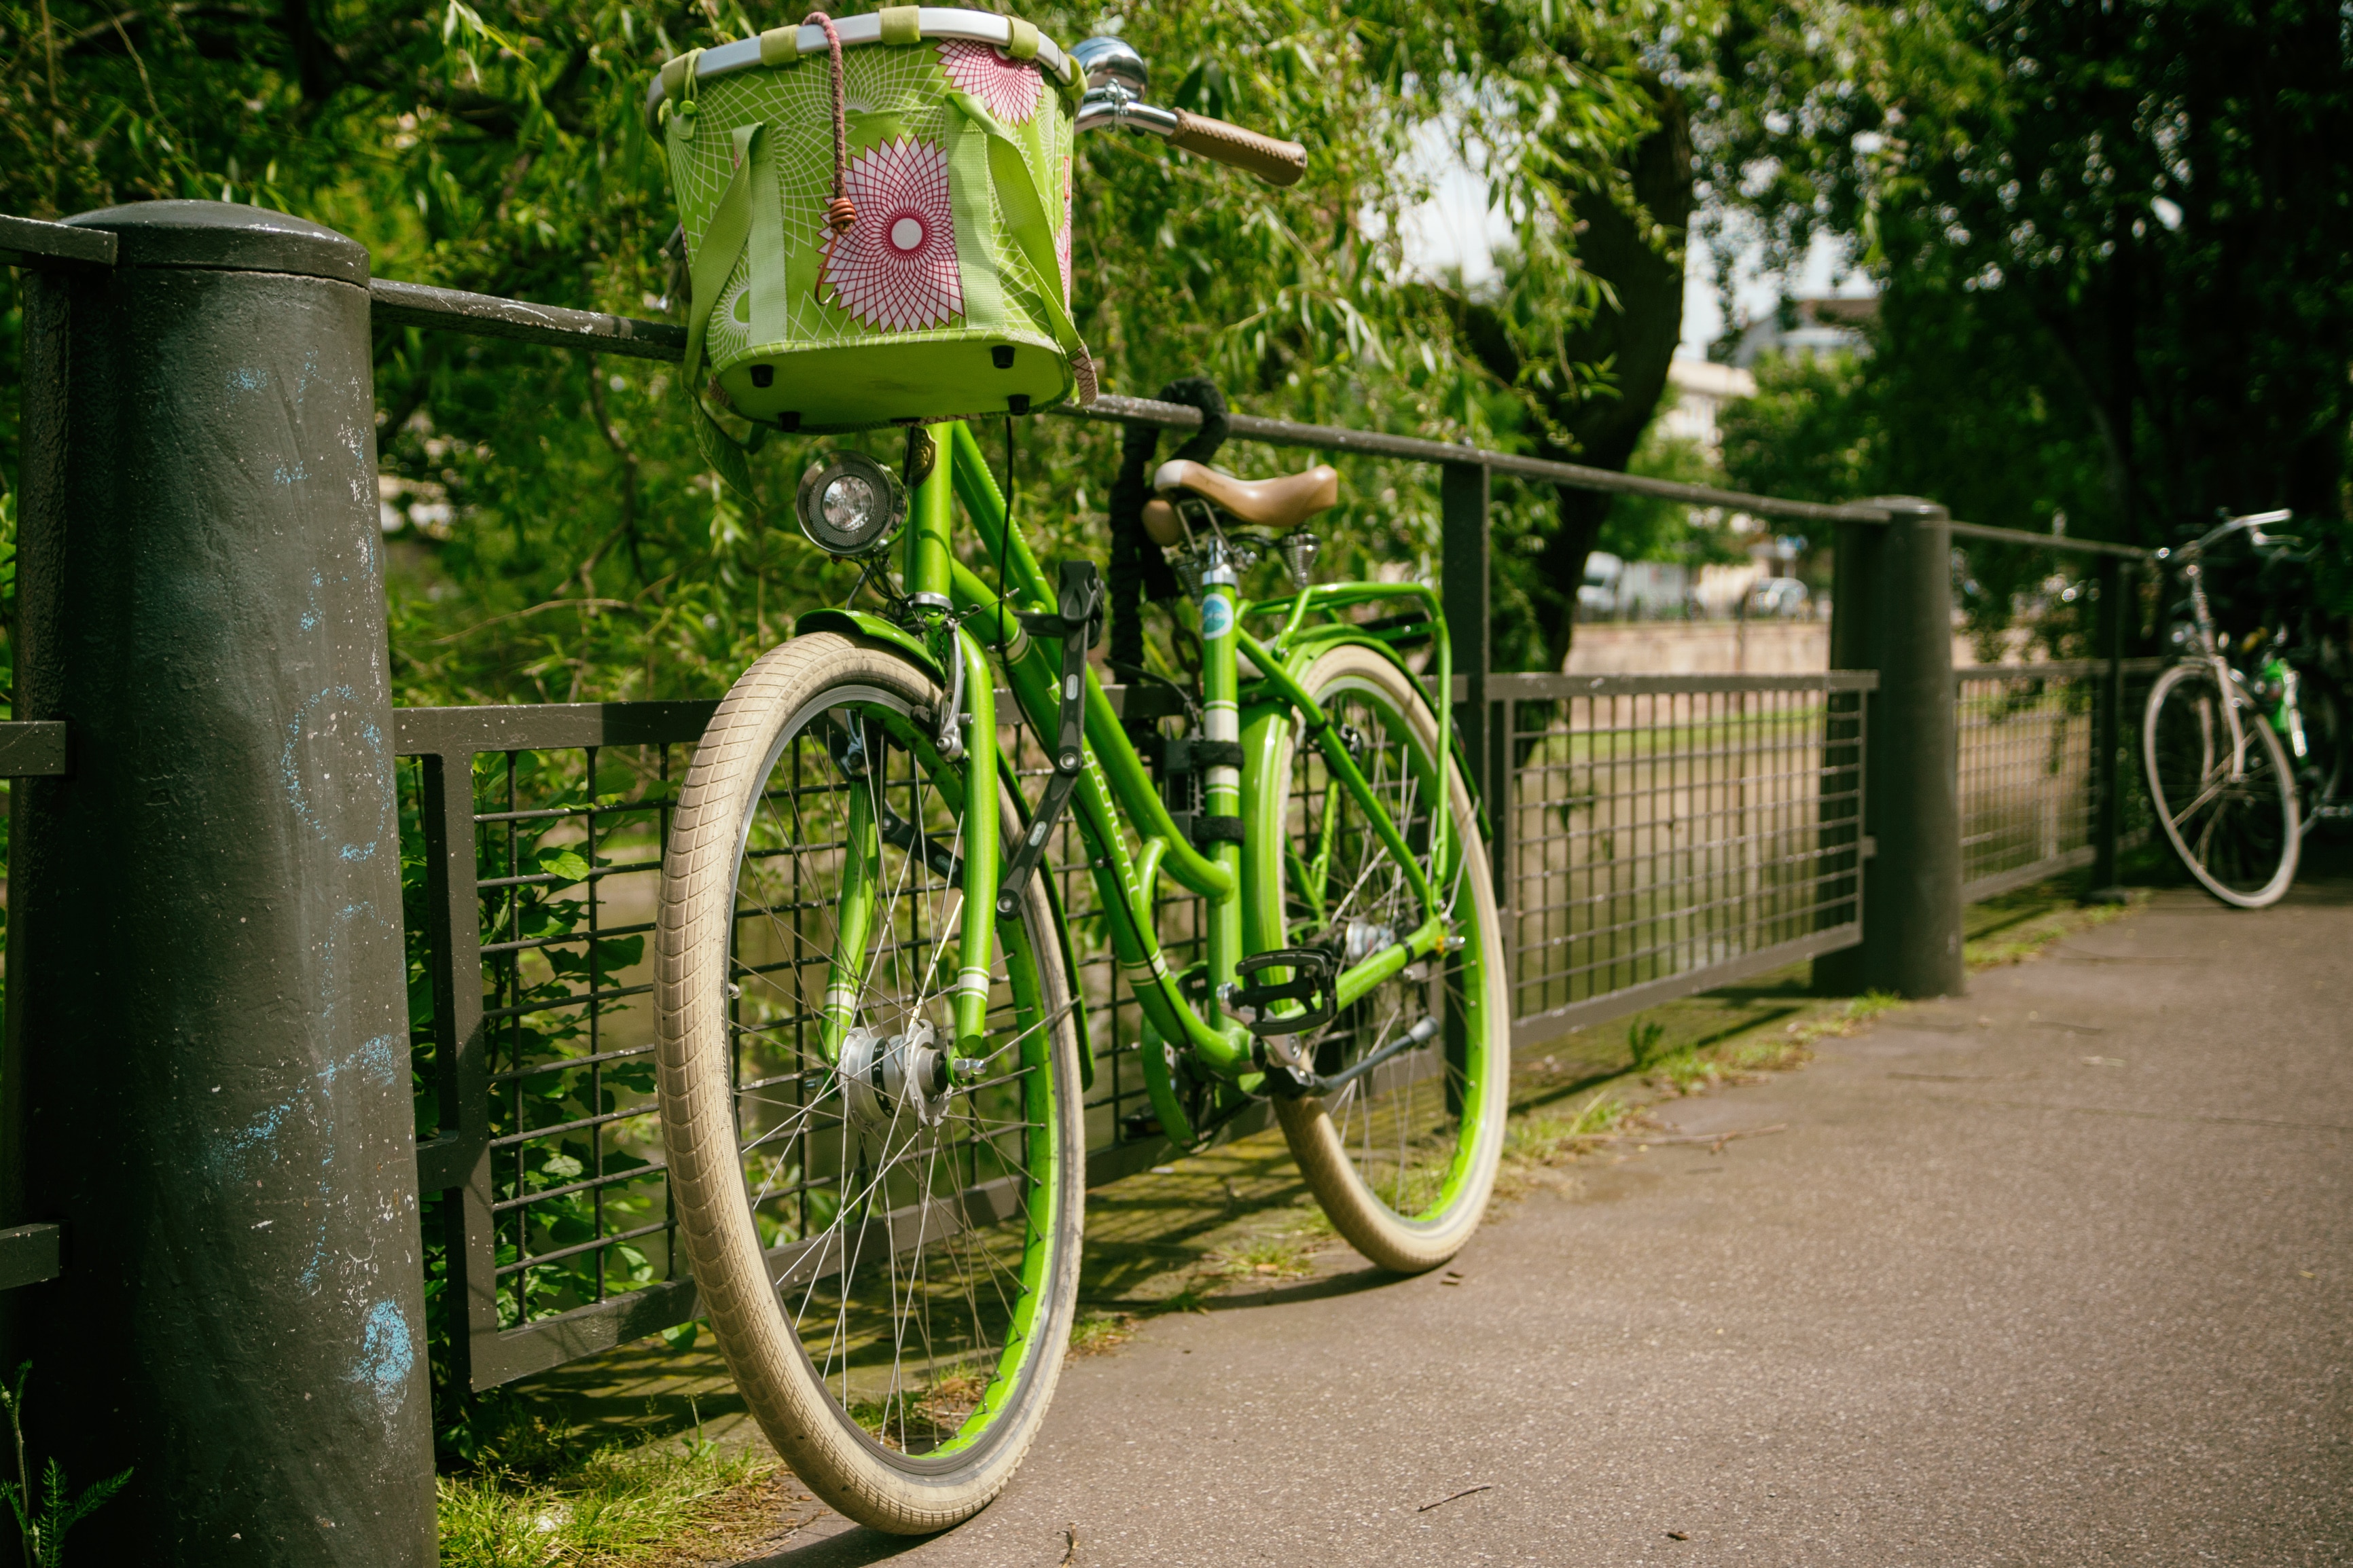 green beach cruiser bicycle  on green railings